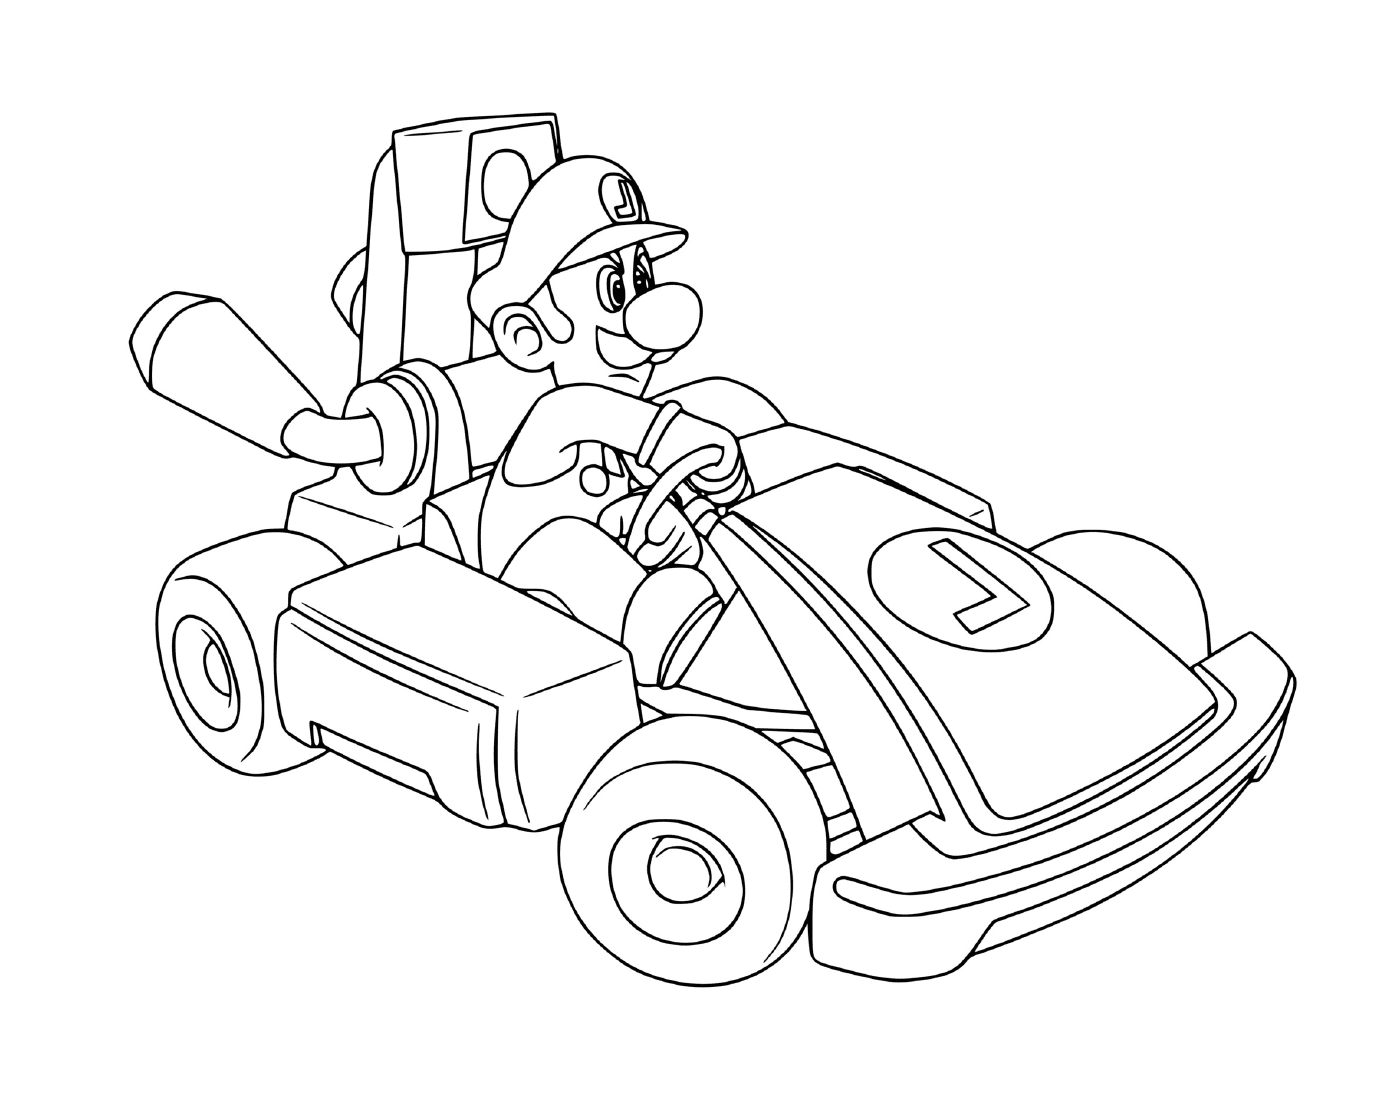  Luigi on a Mario Kart Live race track 